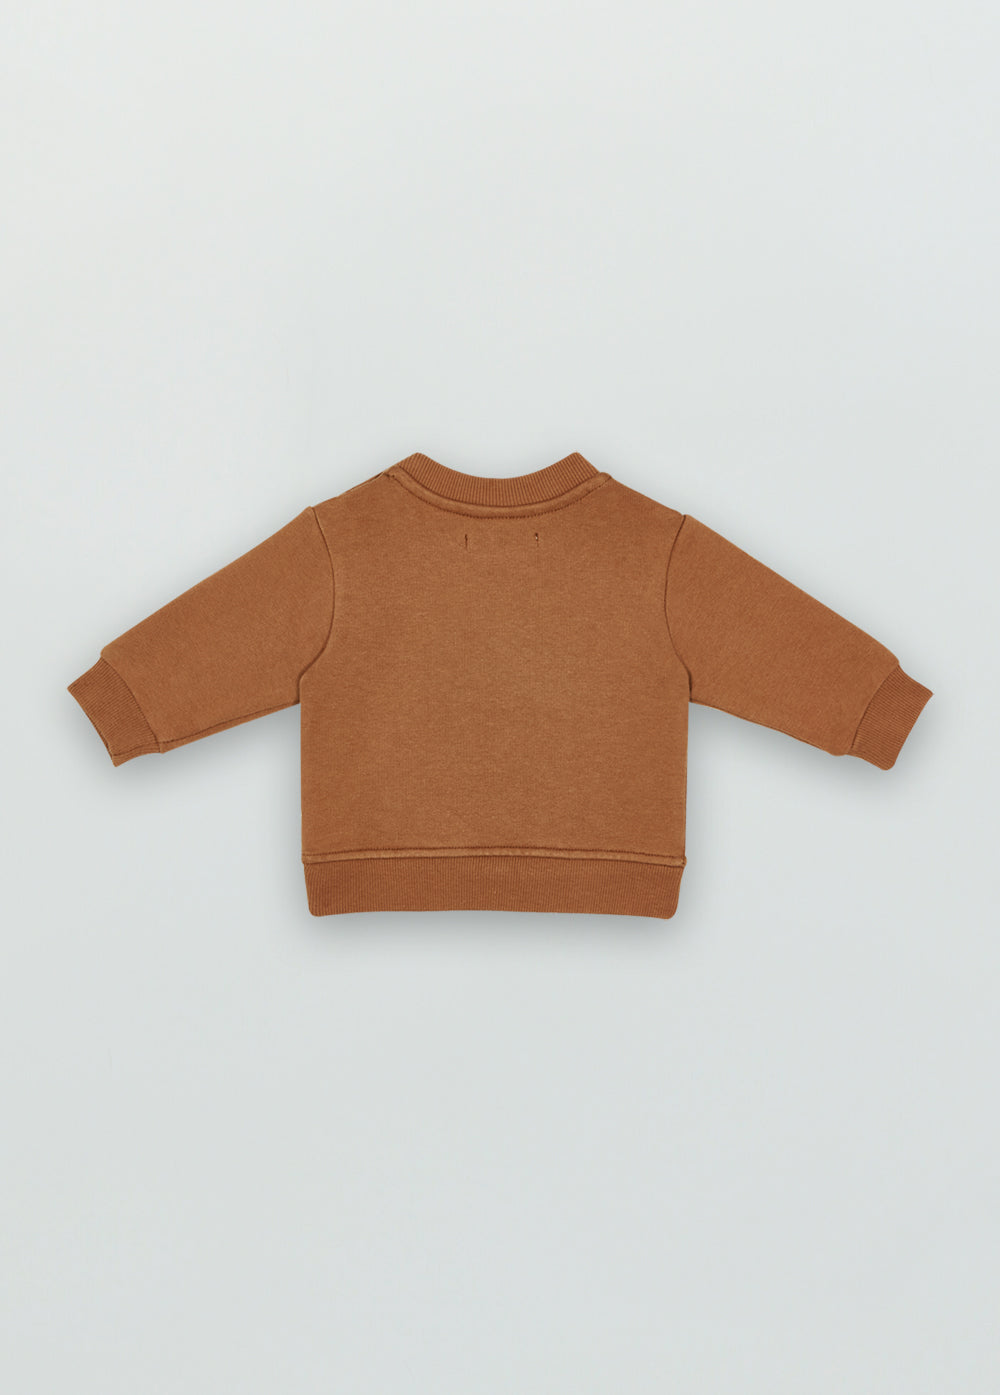 The art of baby sweatshirt toffe